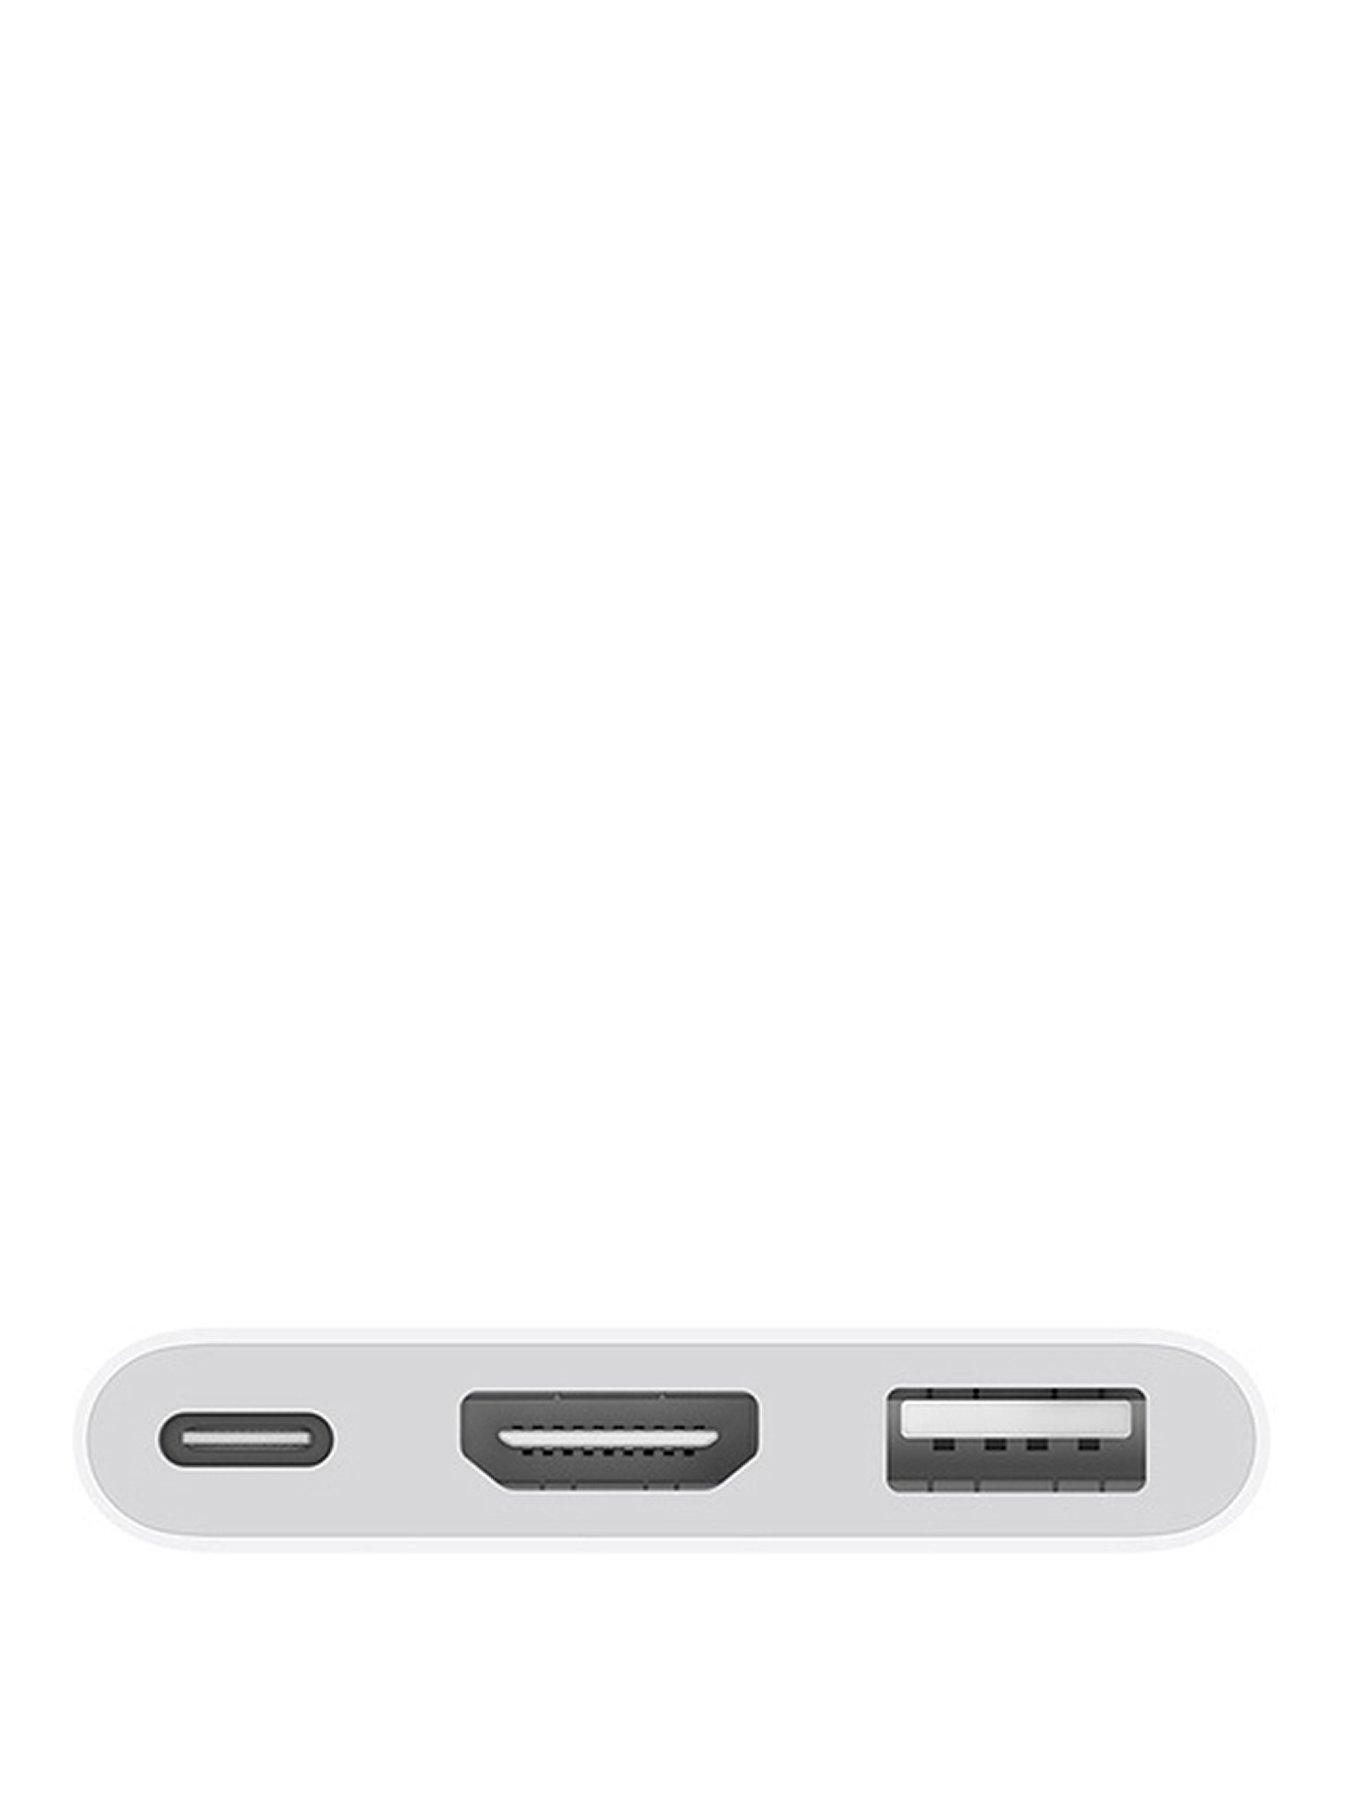 Scale 1:6 Set Apple imac mcbook iphone ipad miniature for Dollhouse  miniature